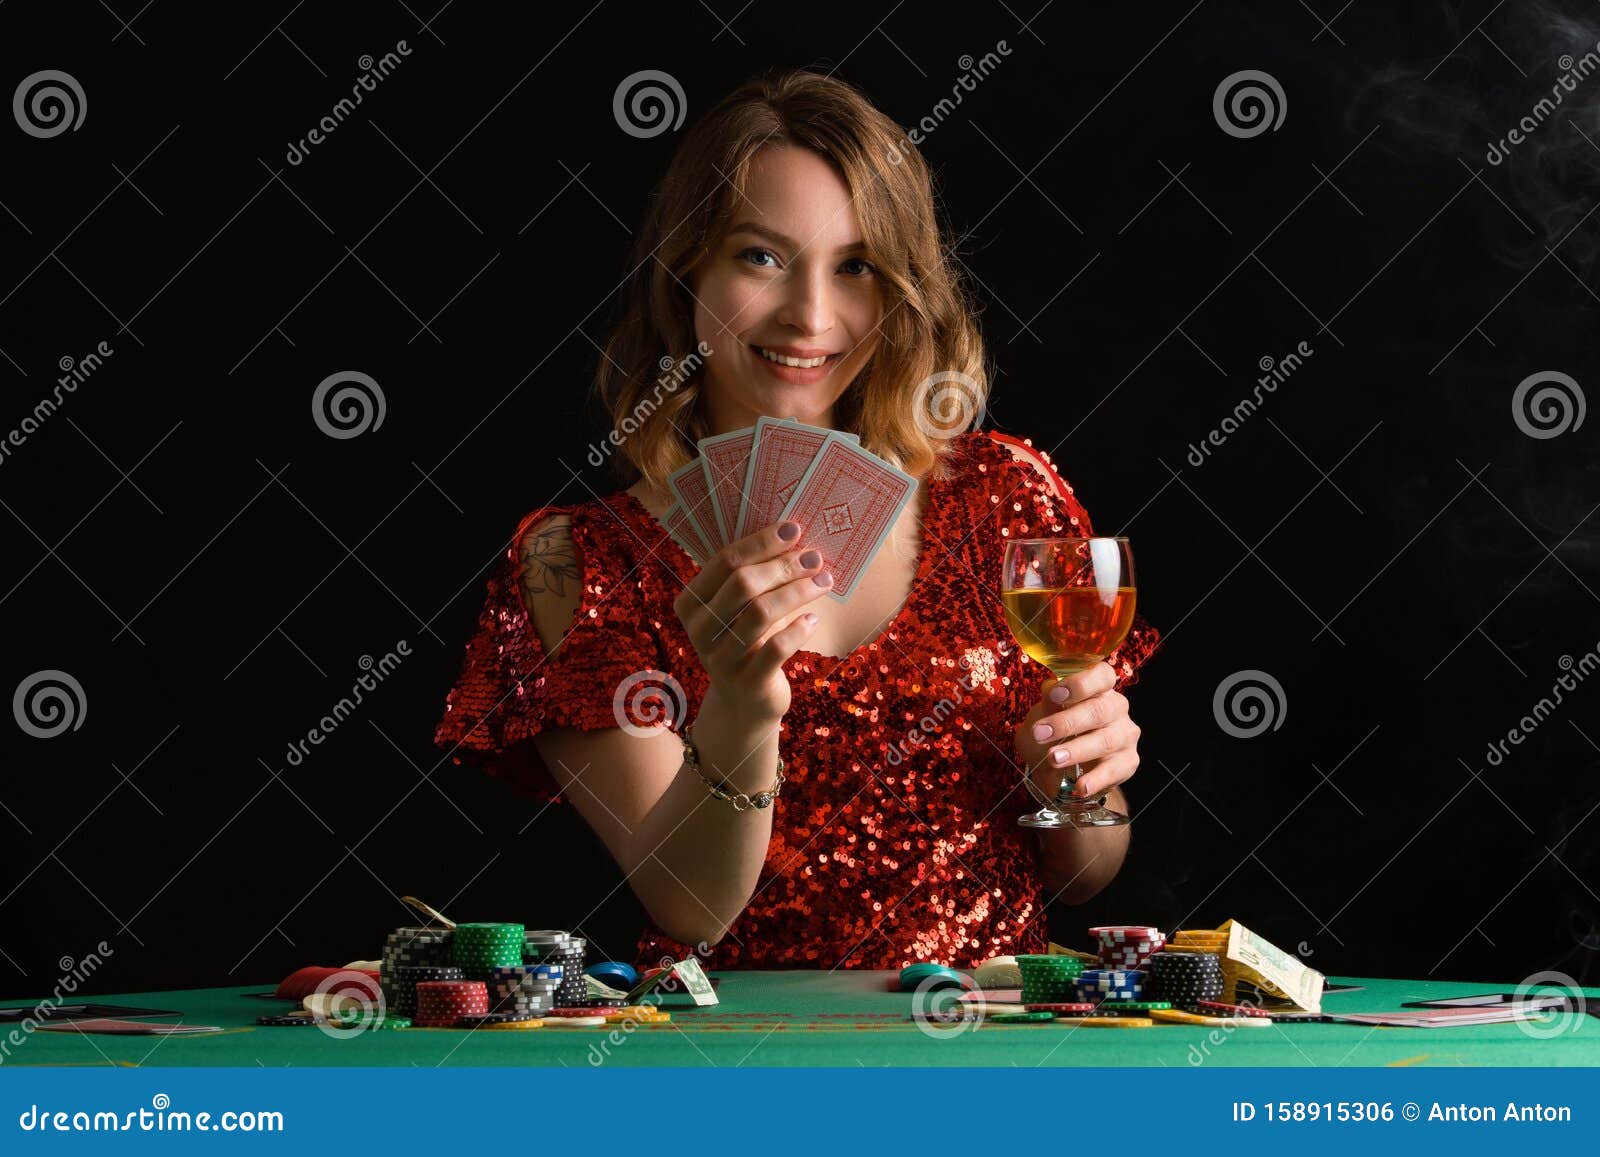 LATEST USA No Deposit Casino Bonus Codes May 